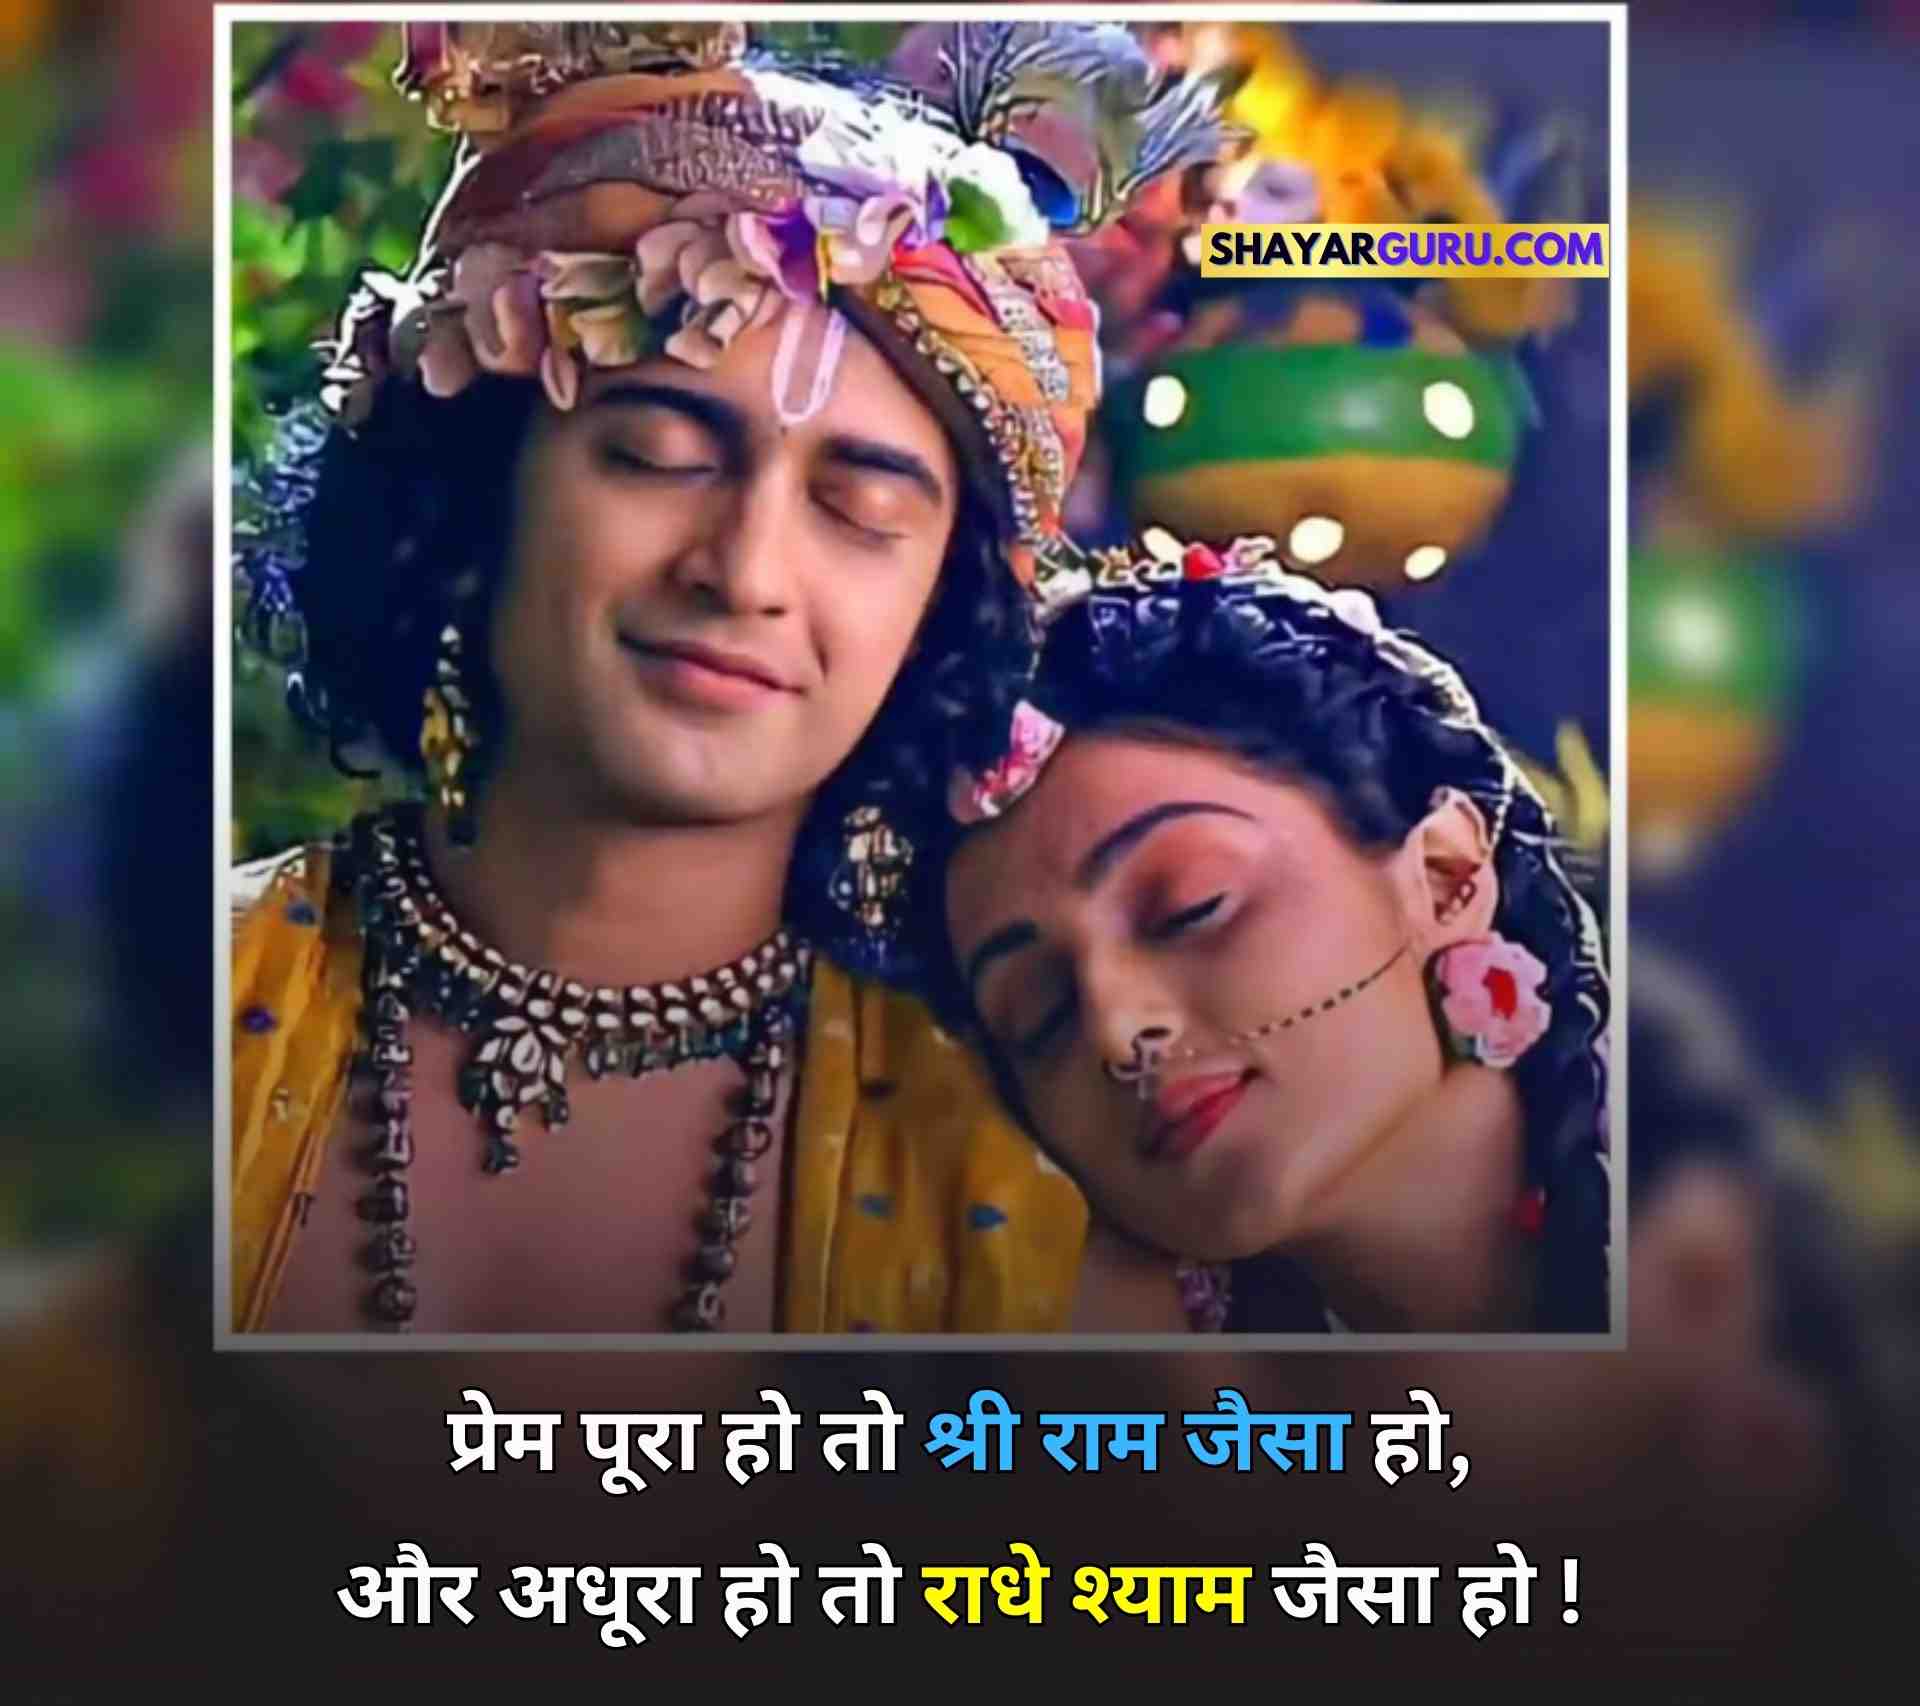 Radha Krishna Love Quotes in Hindi Image